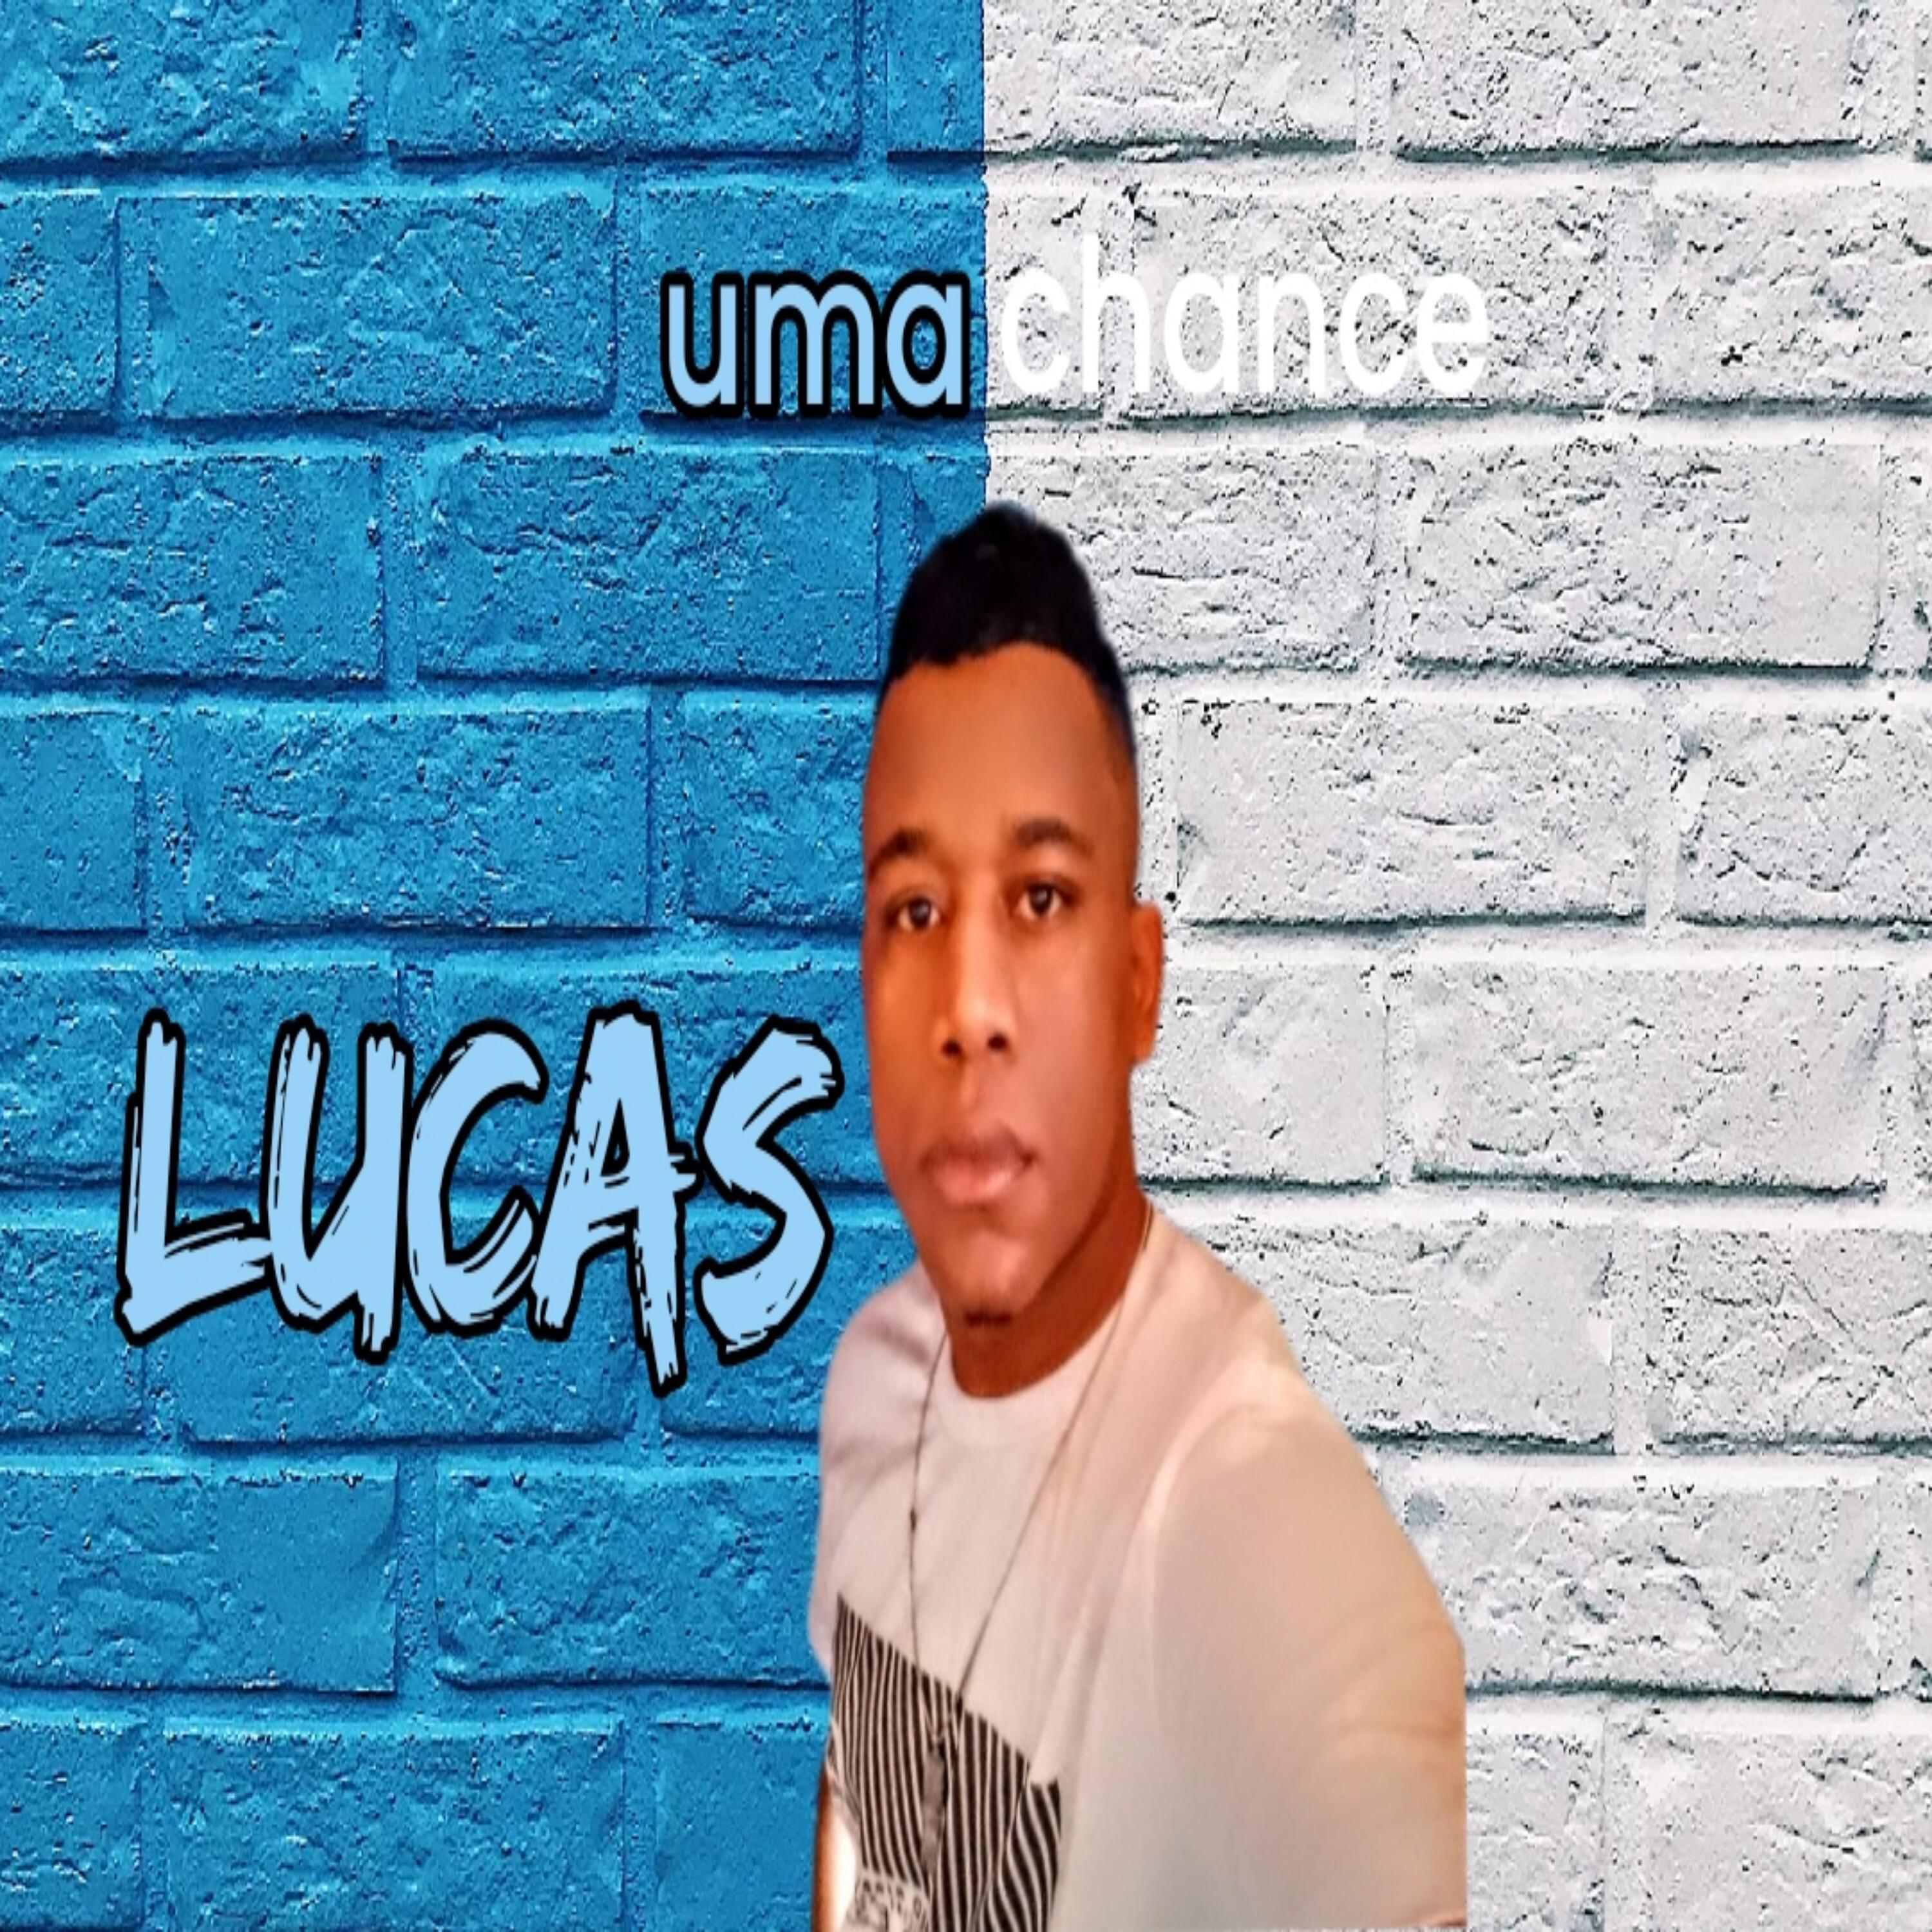 Постер альбома Uma Chance